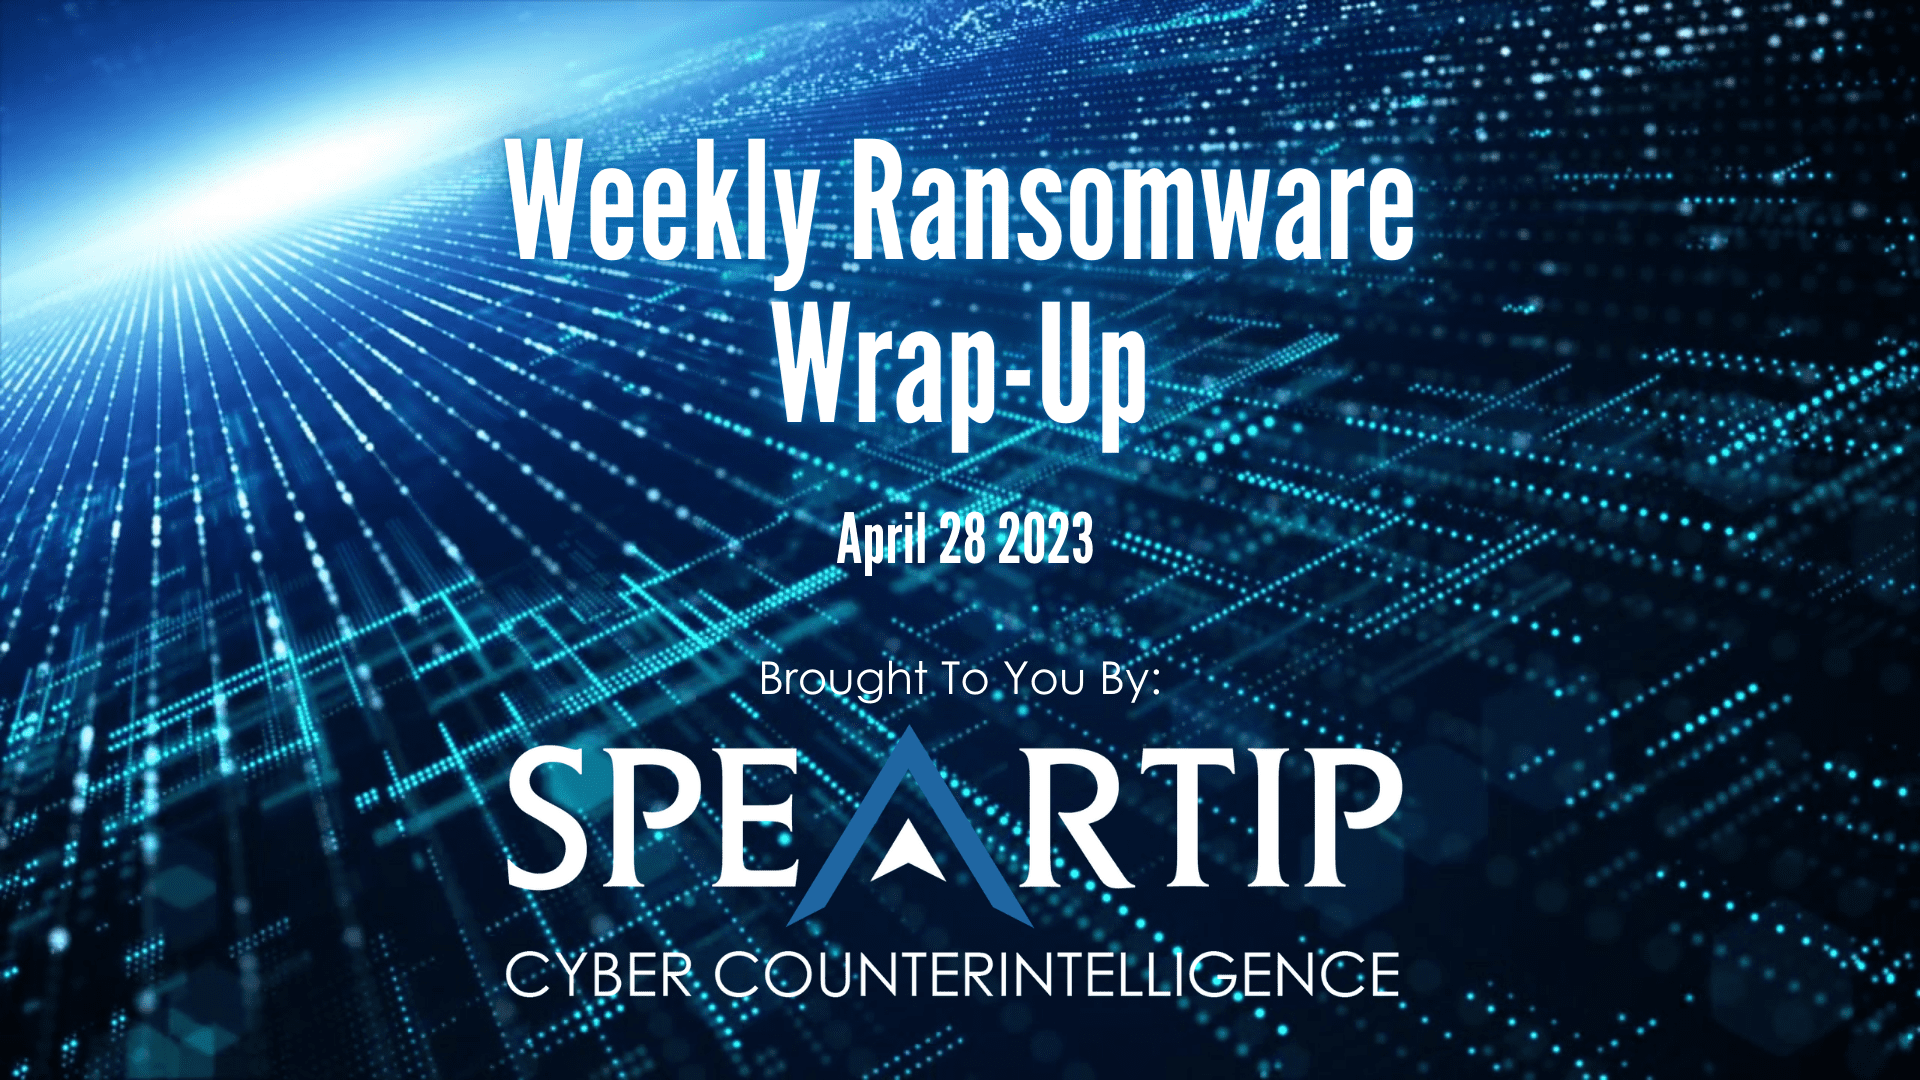 April 28, 2023 Ransomware Wrap-Up